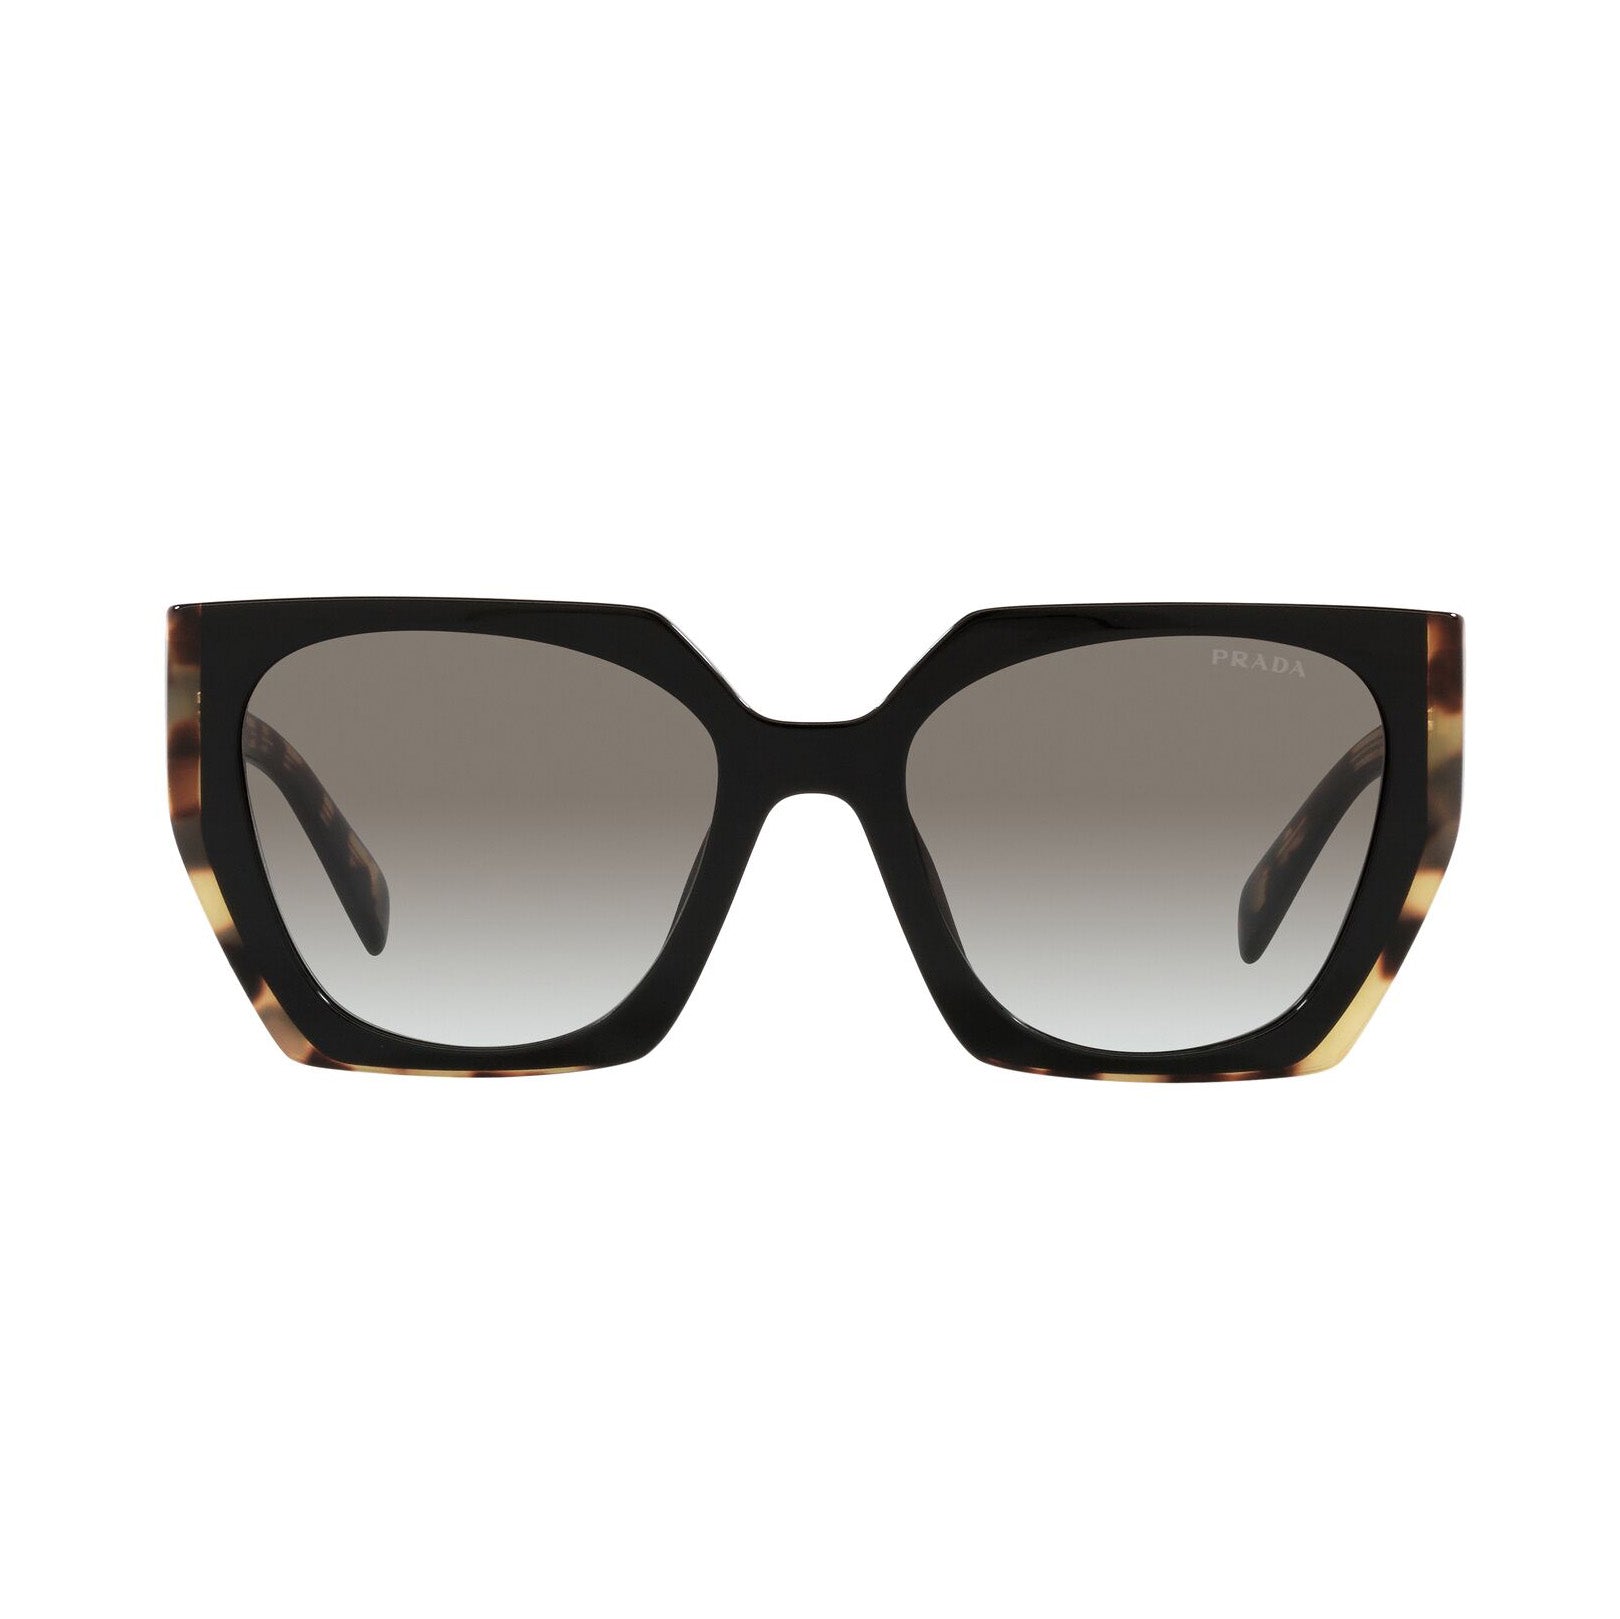 Buy Prada 15WS Womens Sunglasses Online | Bupa Optical